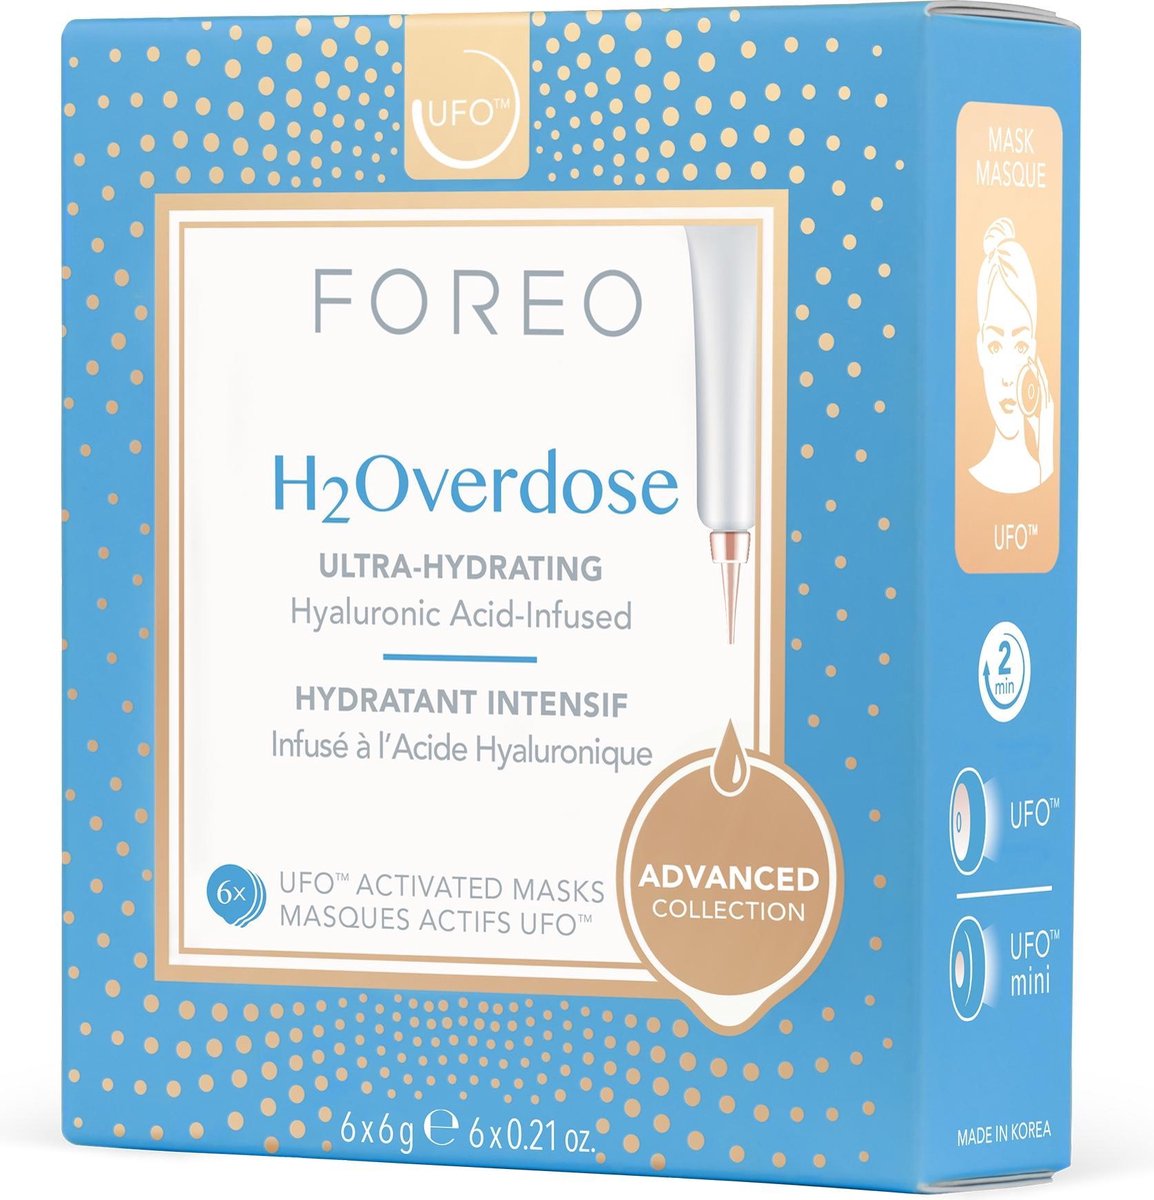 FOREO – Gezichtsmasker H2Overdose voor UFO™ - FOREO